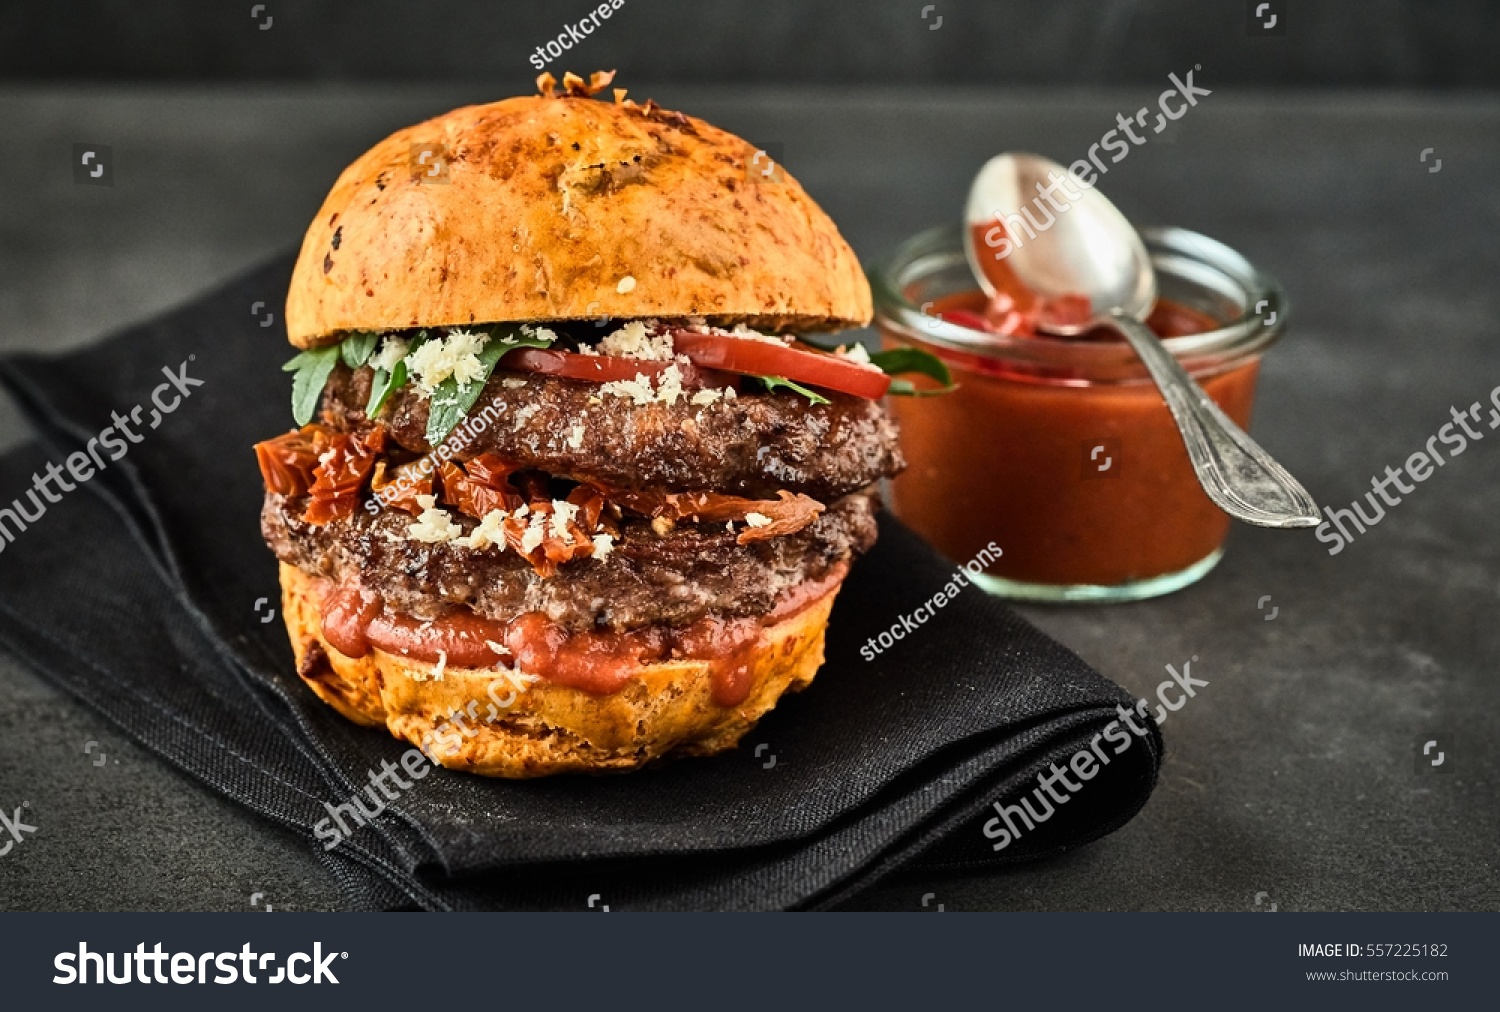 1,104 Burger relish Images, Stock Photos & Vectors | Shutterstock